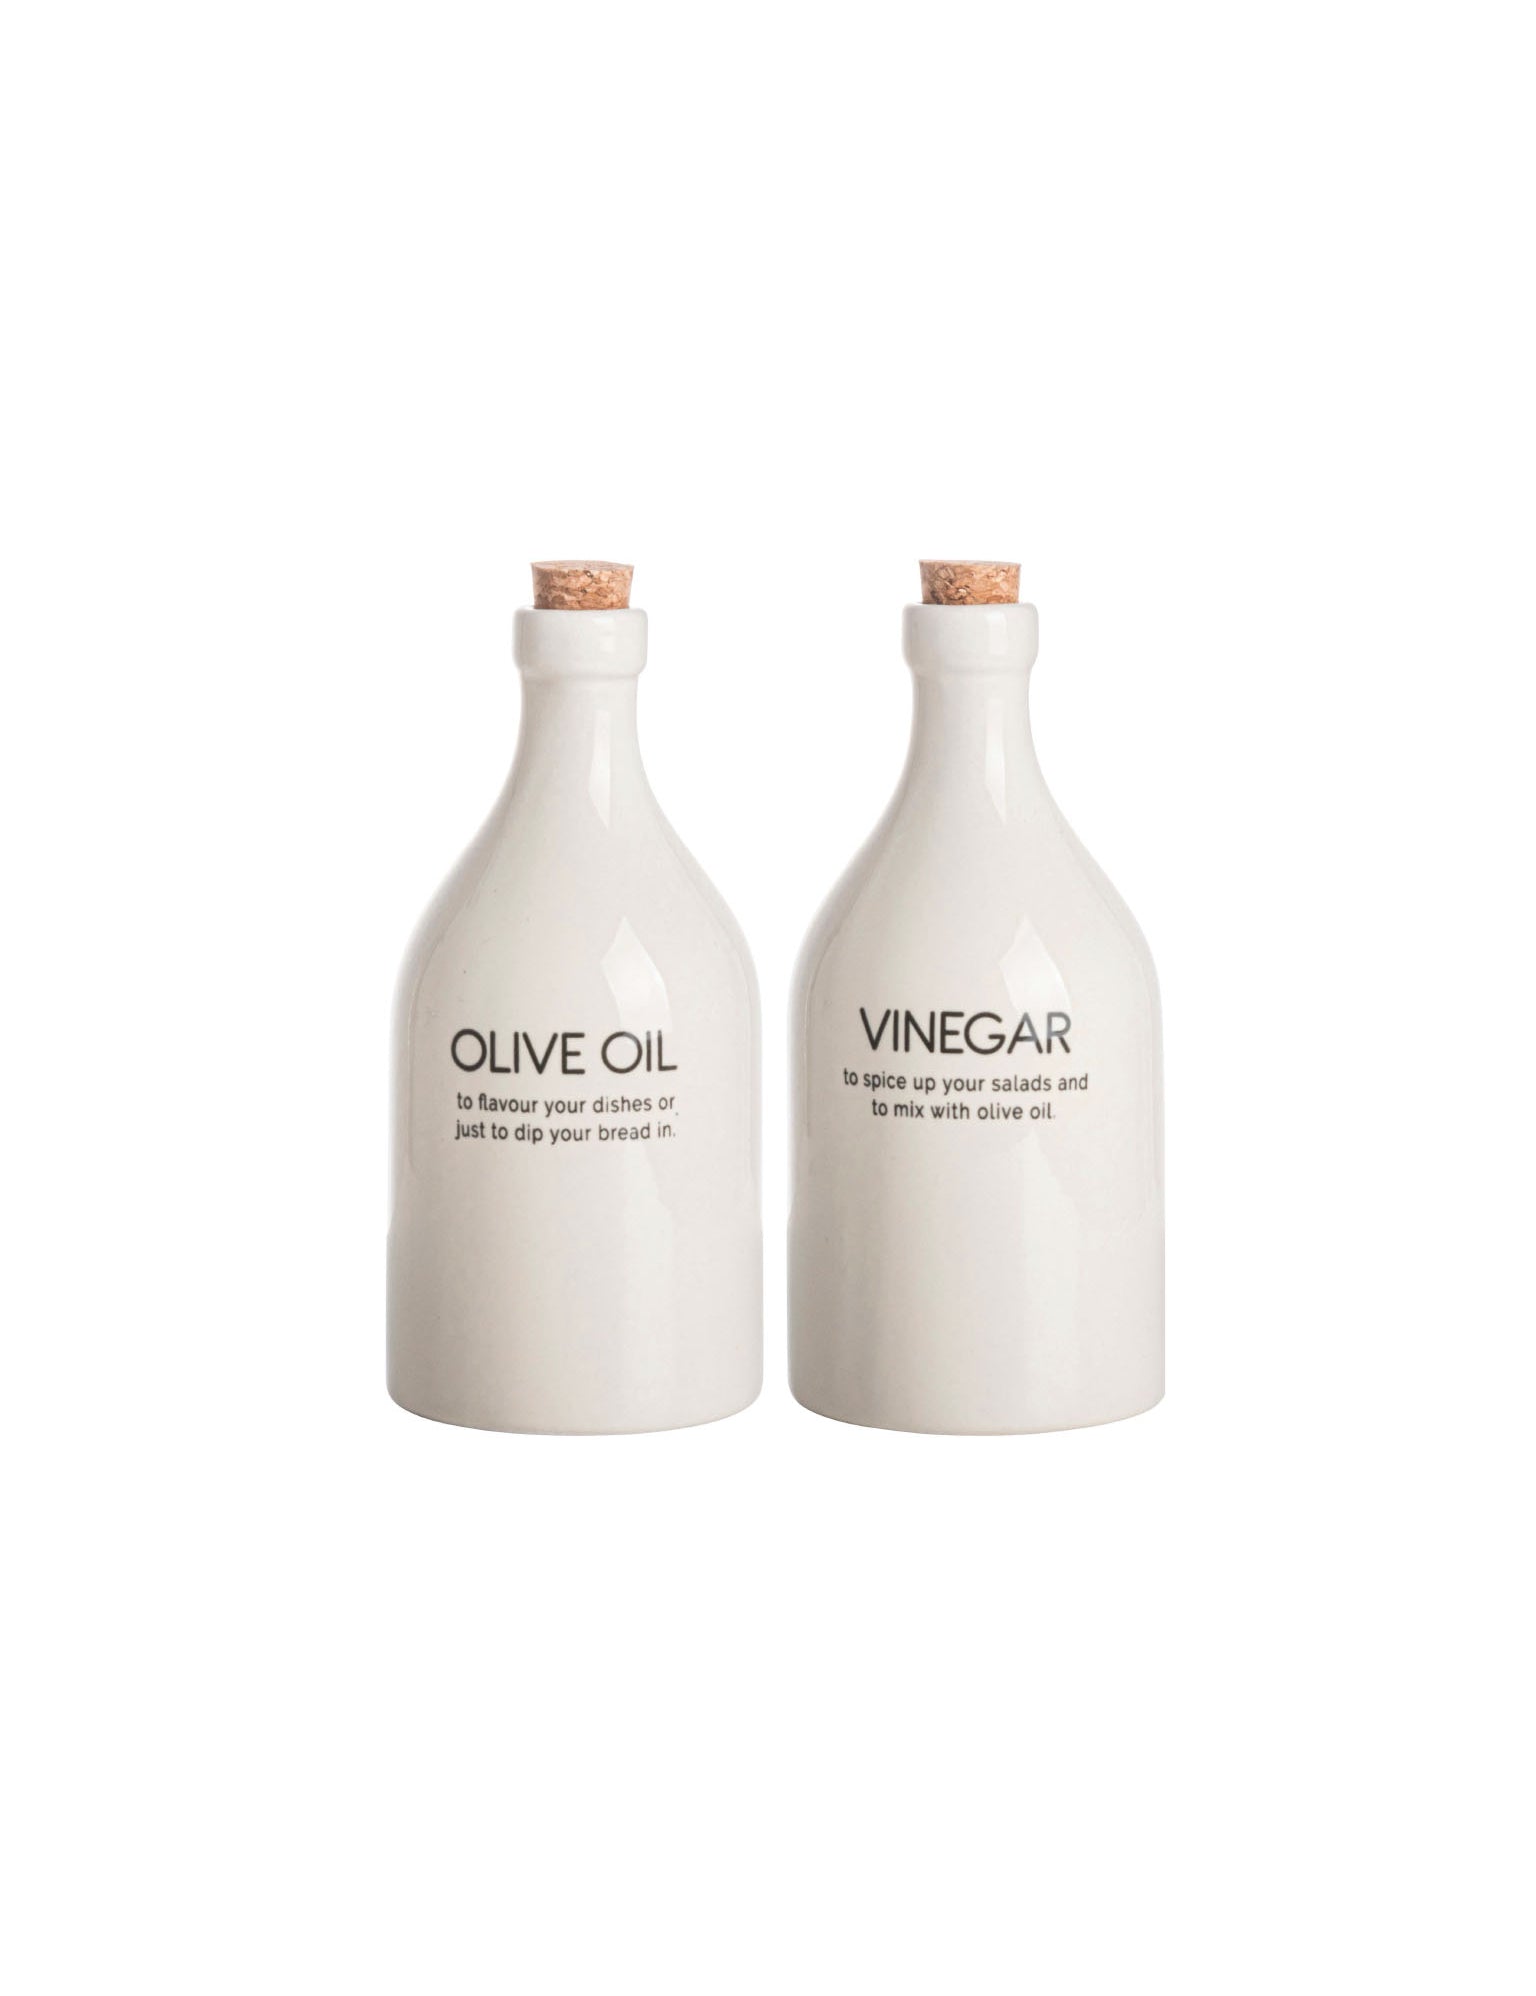 Olive Oil and Vinegar Bottles with cork tops